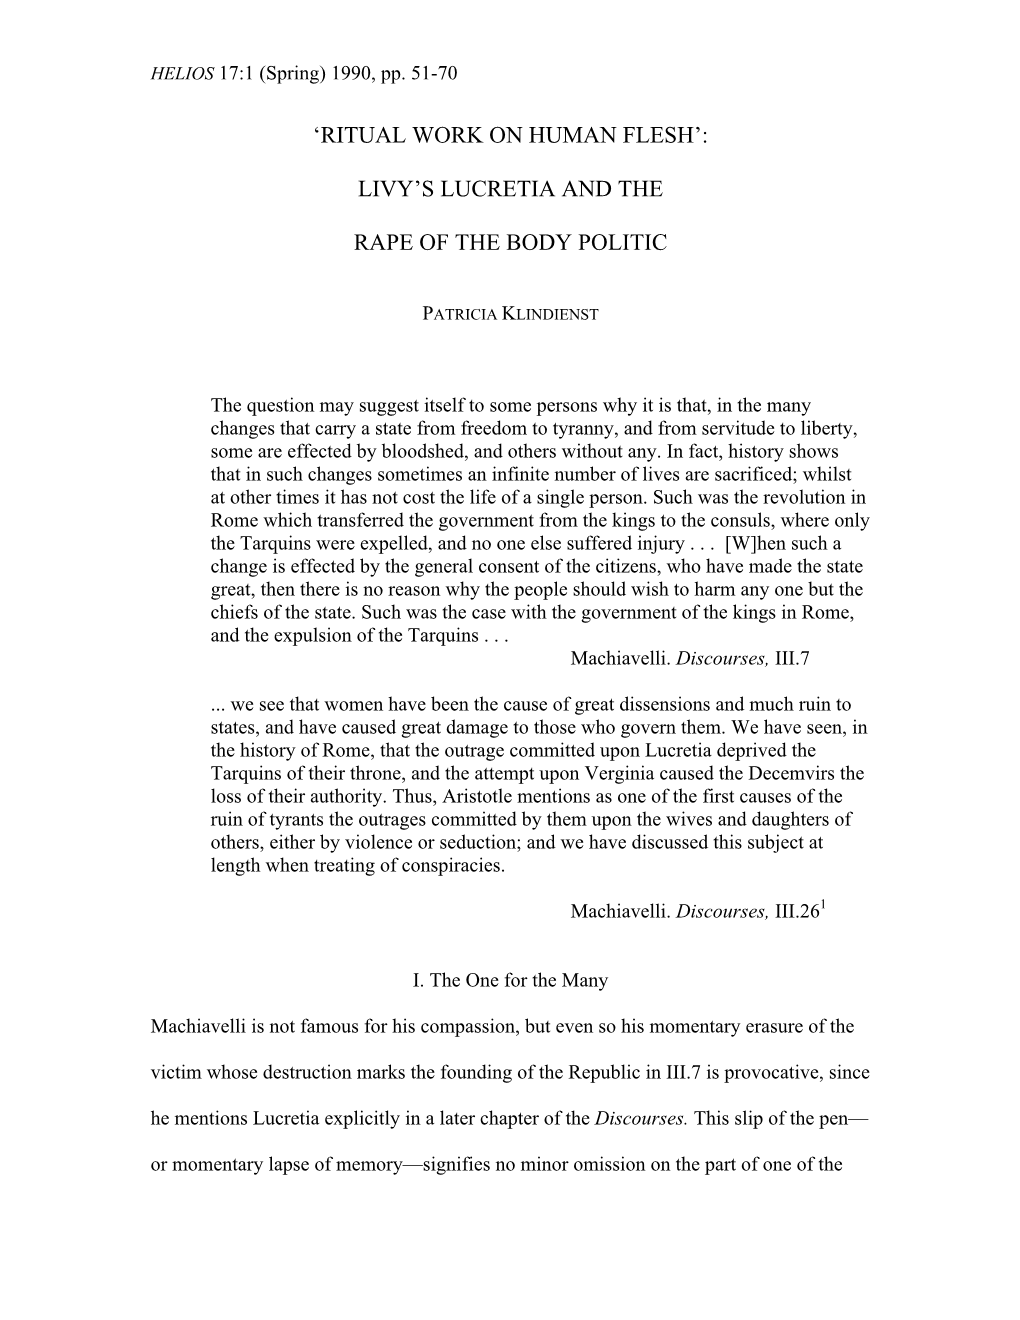 'Ritual Work on Human Flesh': Livy's Lucretia and the Rape of the Body